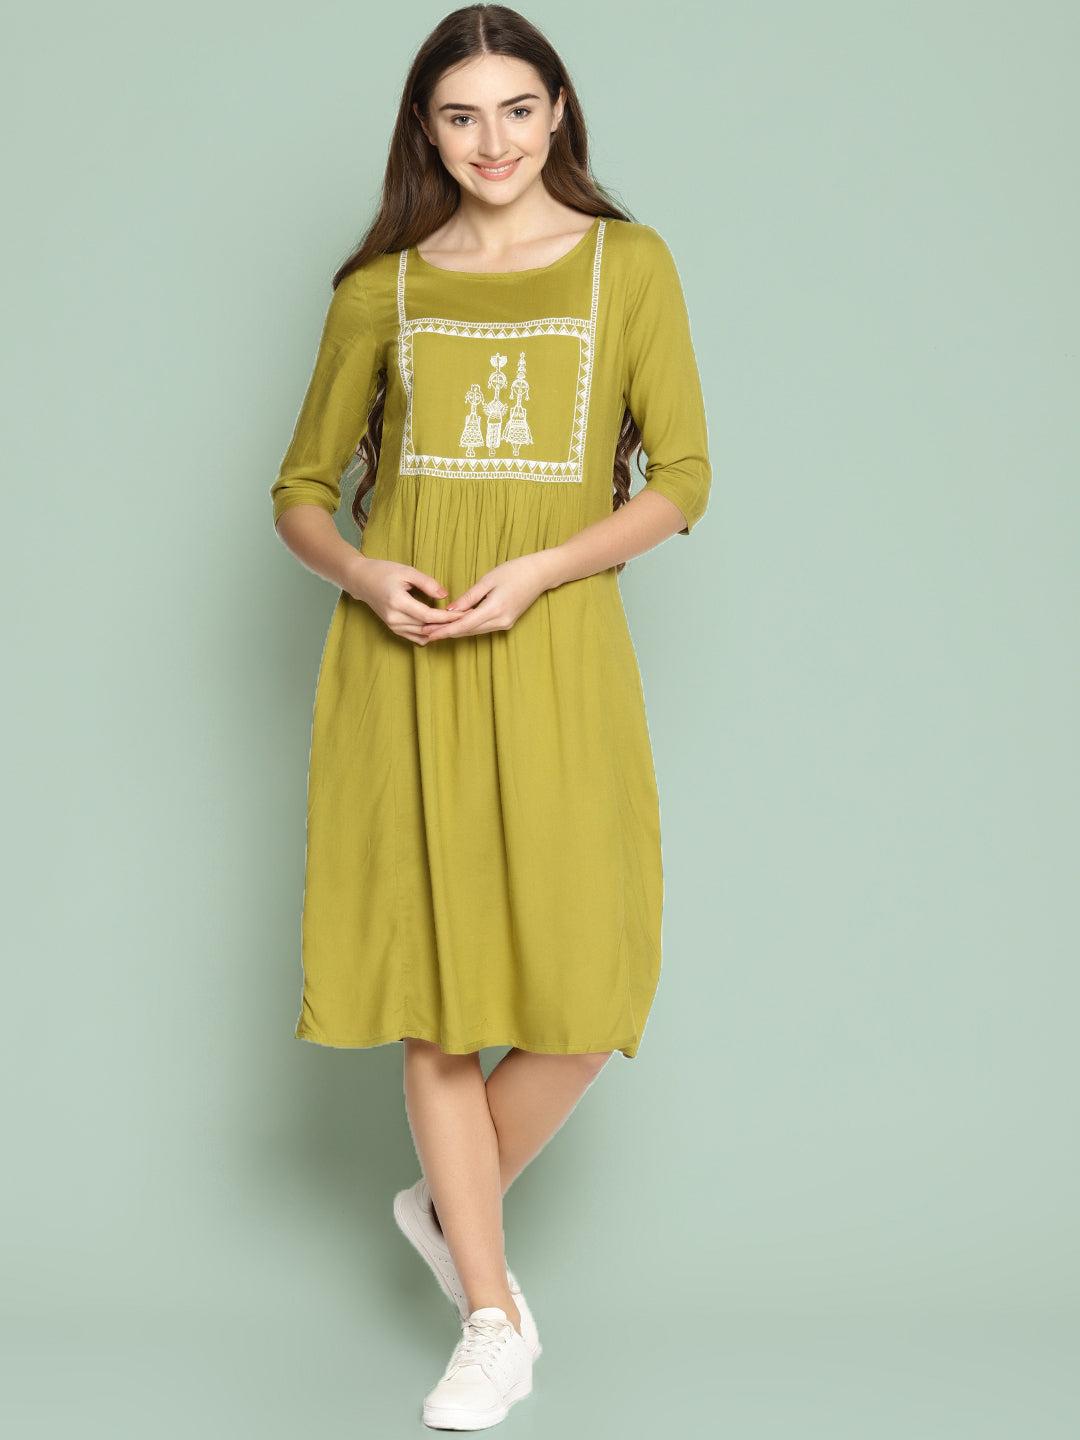 khaki shift dress with embroidery